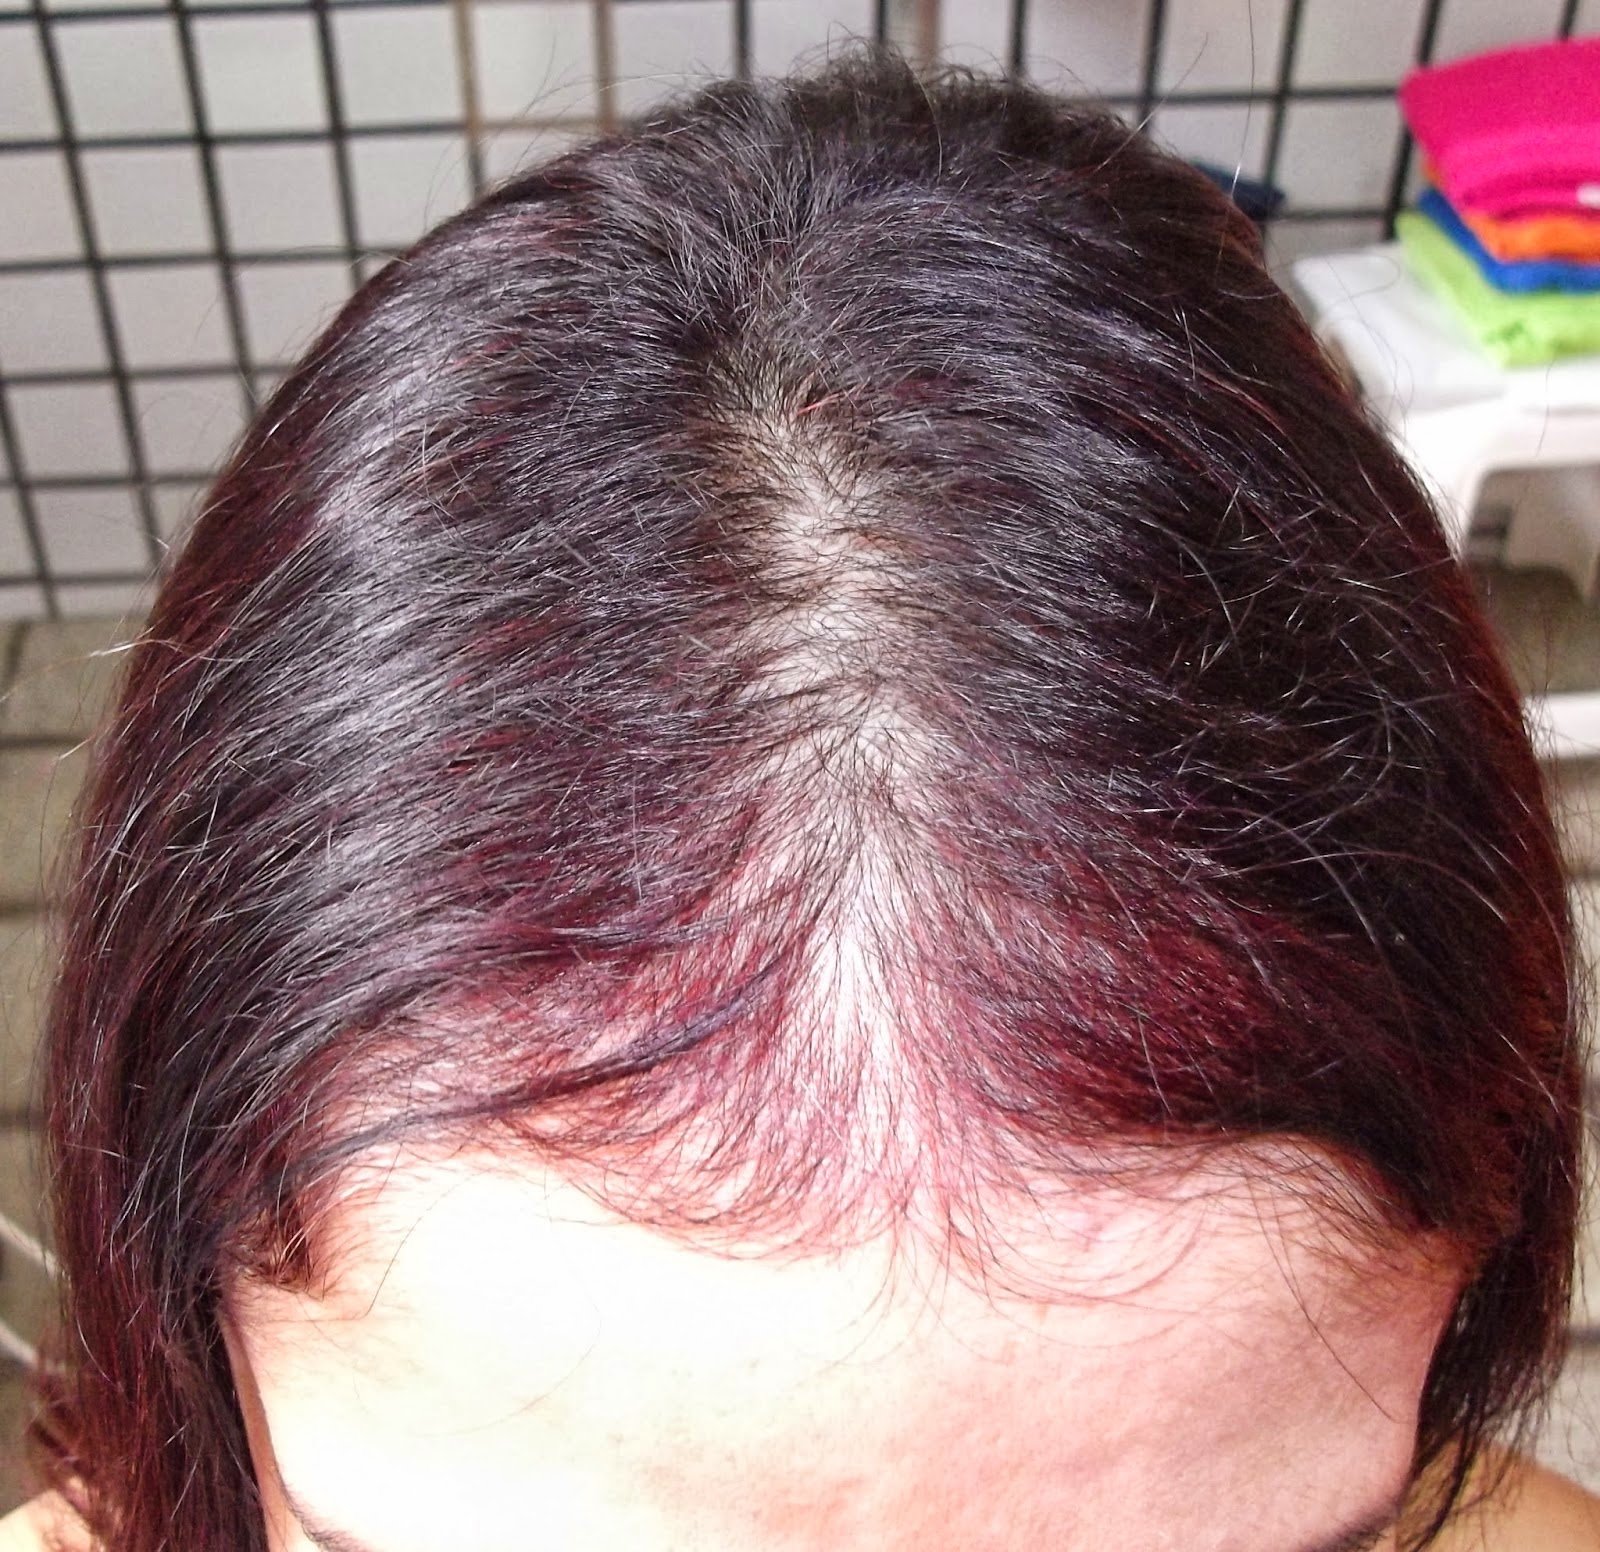 hair loss doctor: What is telogen effluvium